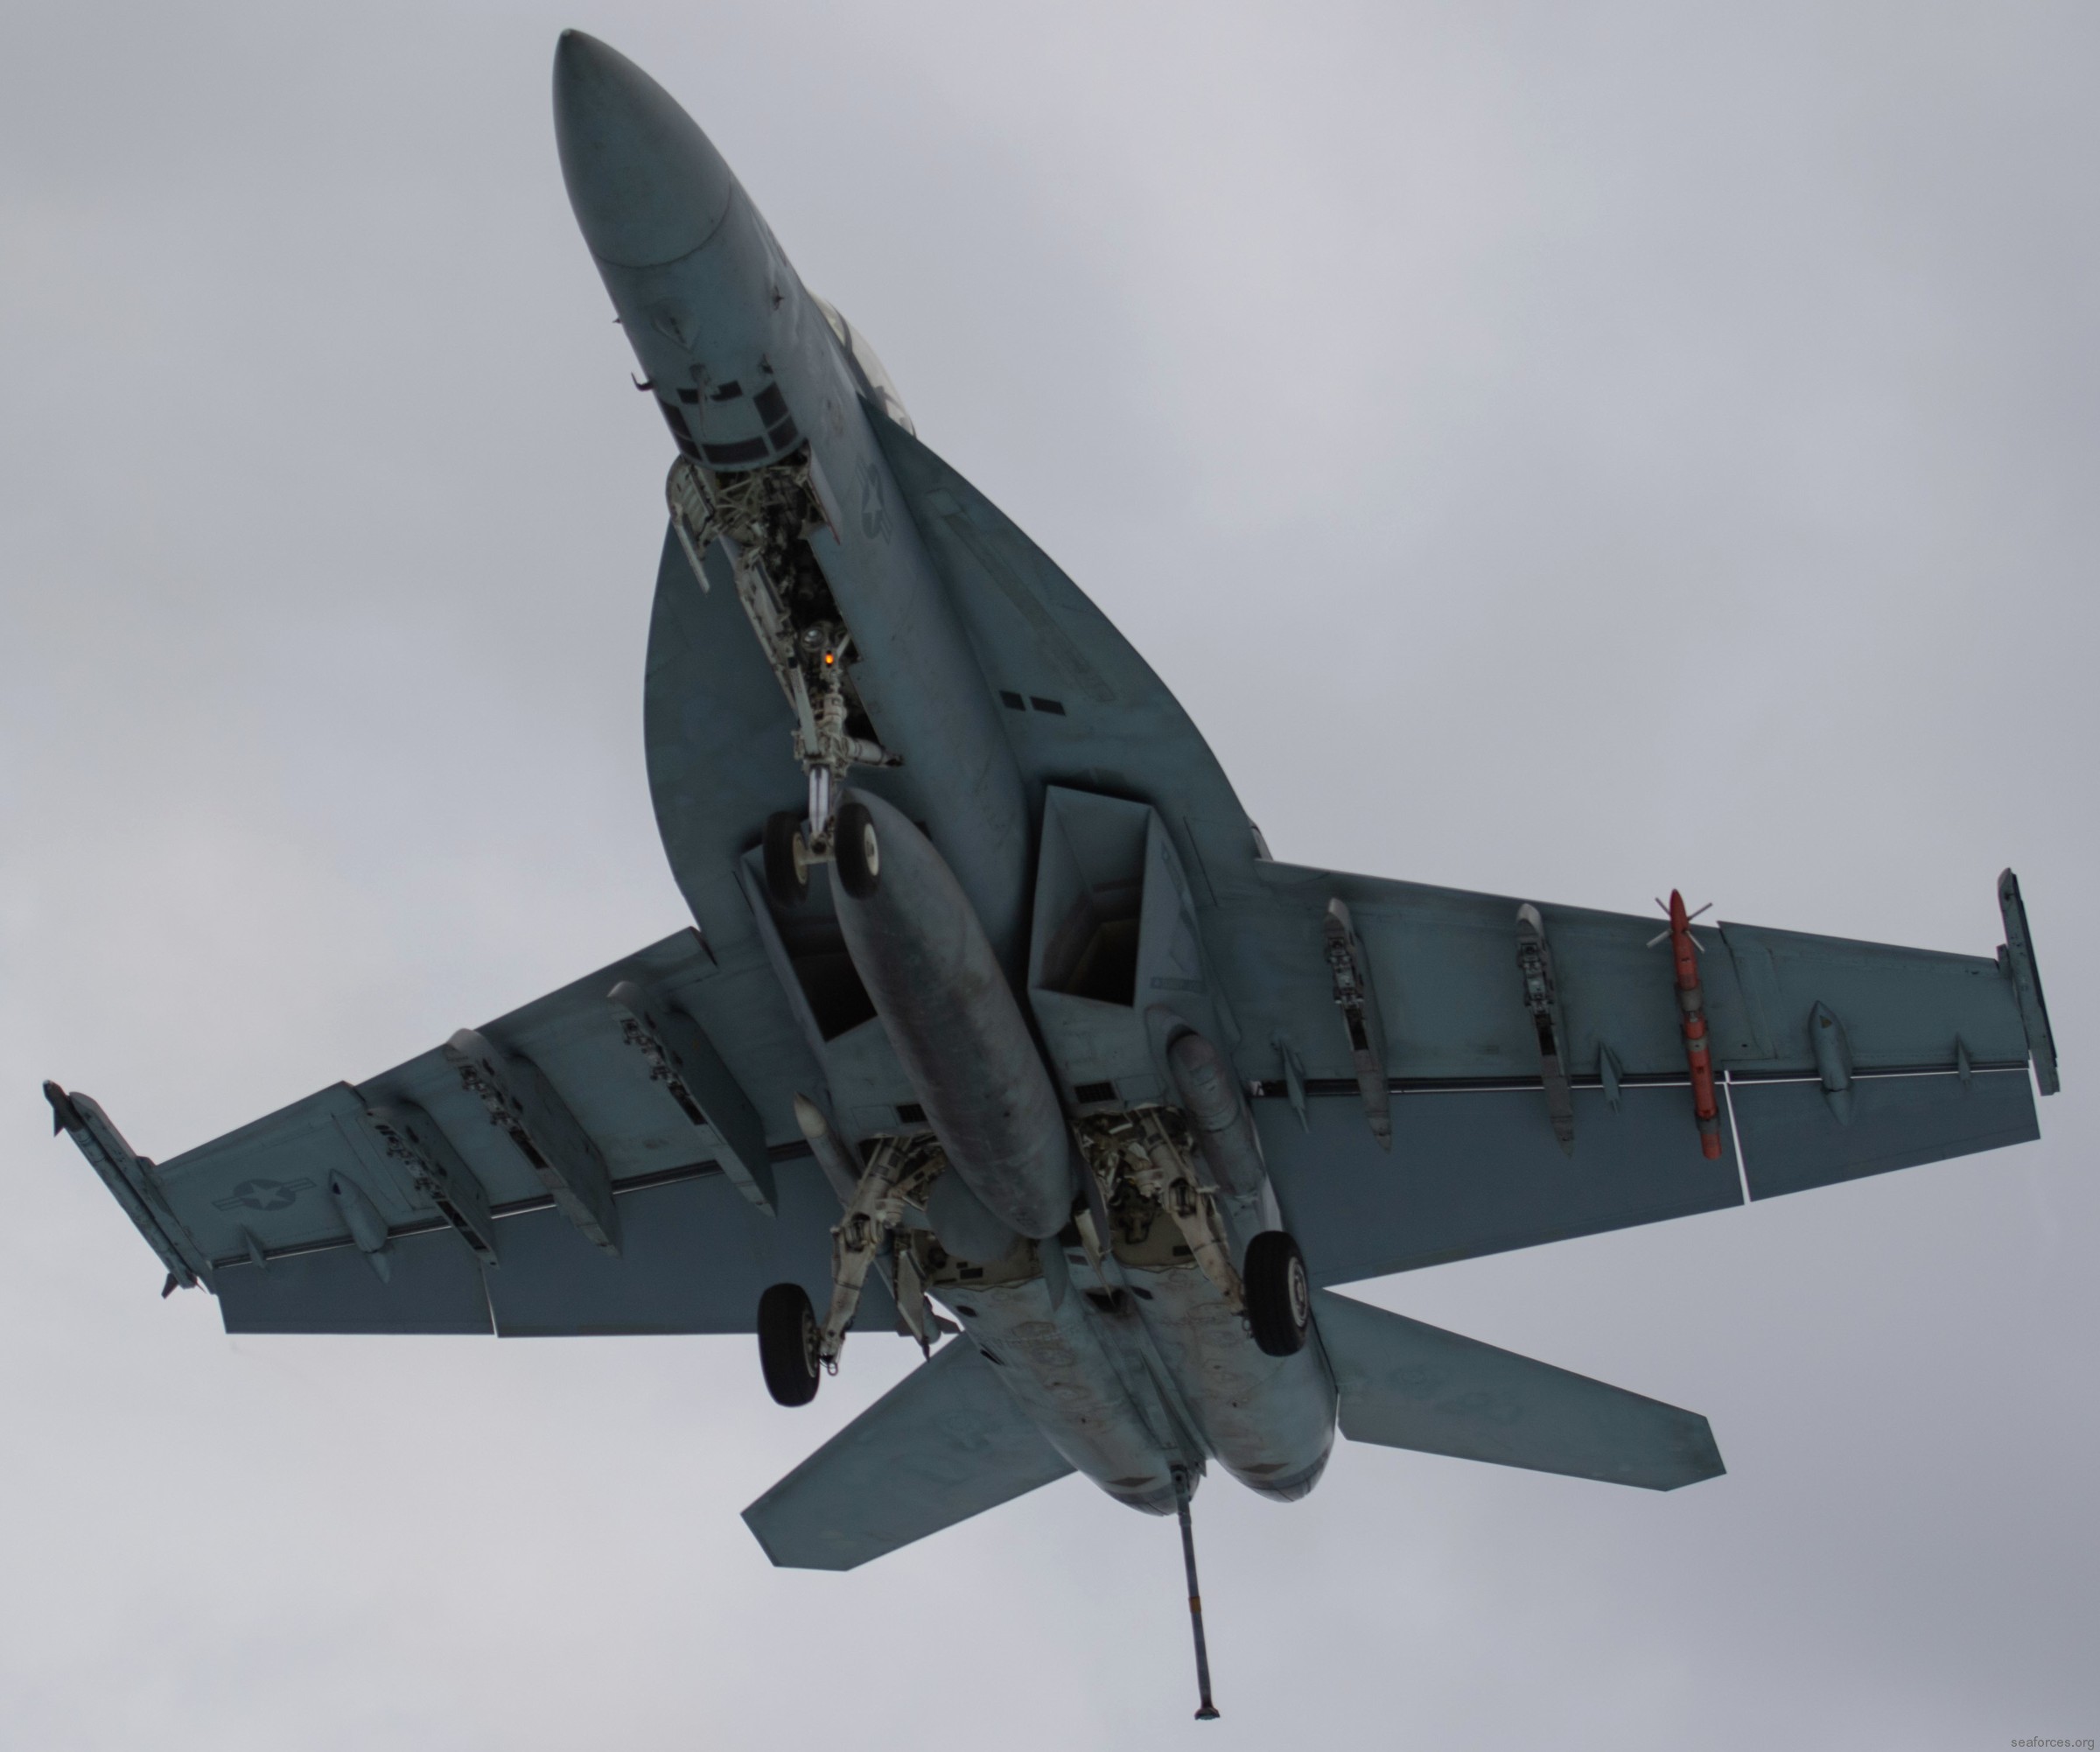 vfa-151 vigilantes strike fighter squadron navy f/a-18e super hornet carrier air wing cvw-9 uss john c. stennis cvn-74 09